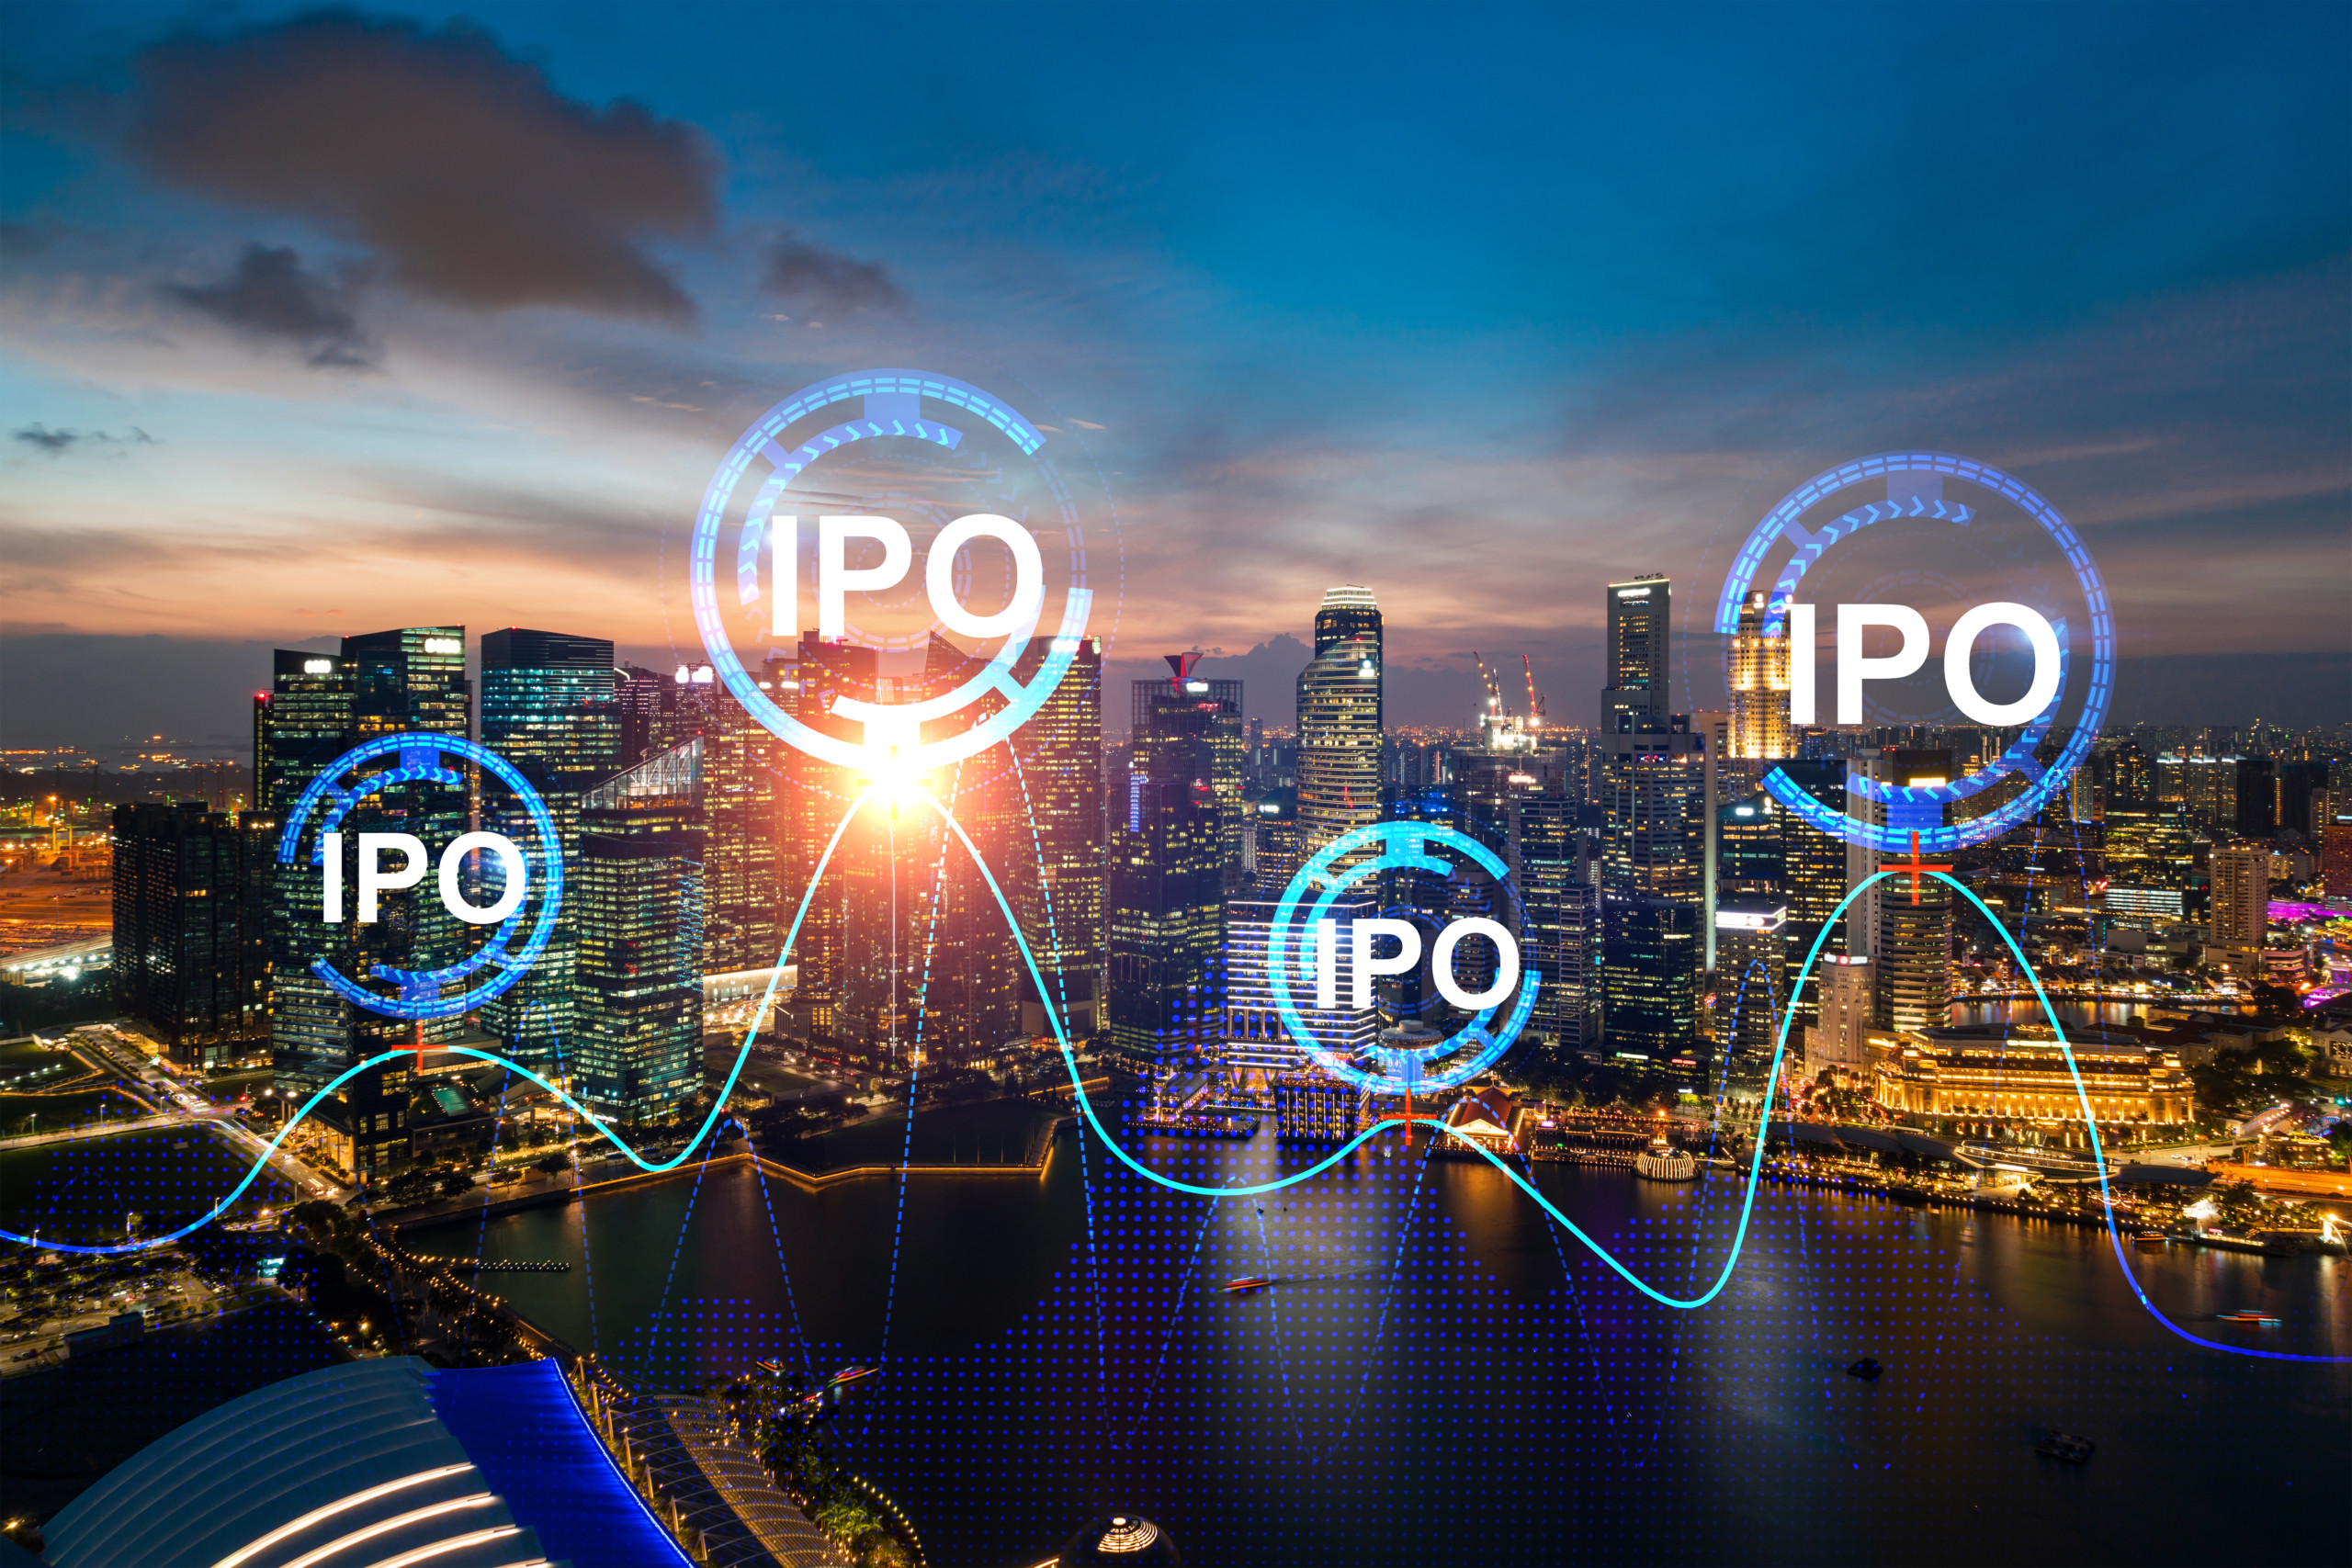 IPO-RADAR (Inspira Technologies Oxy)